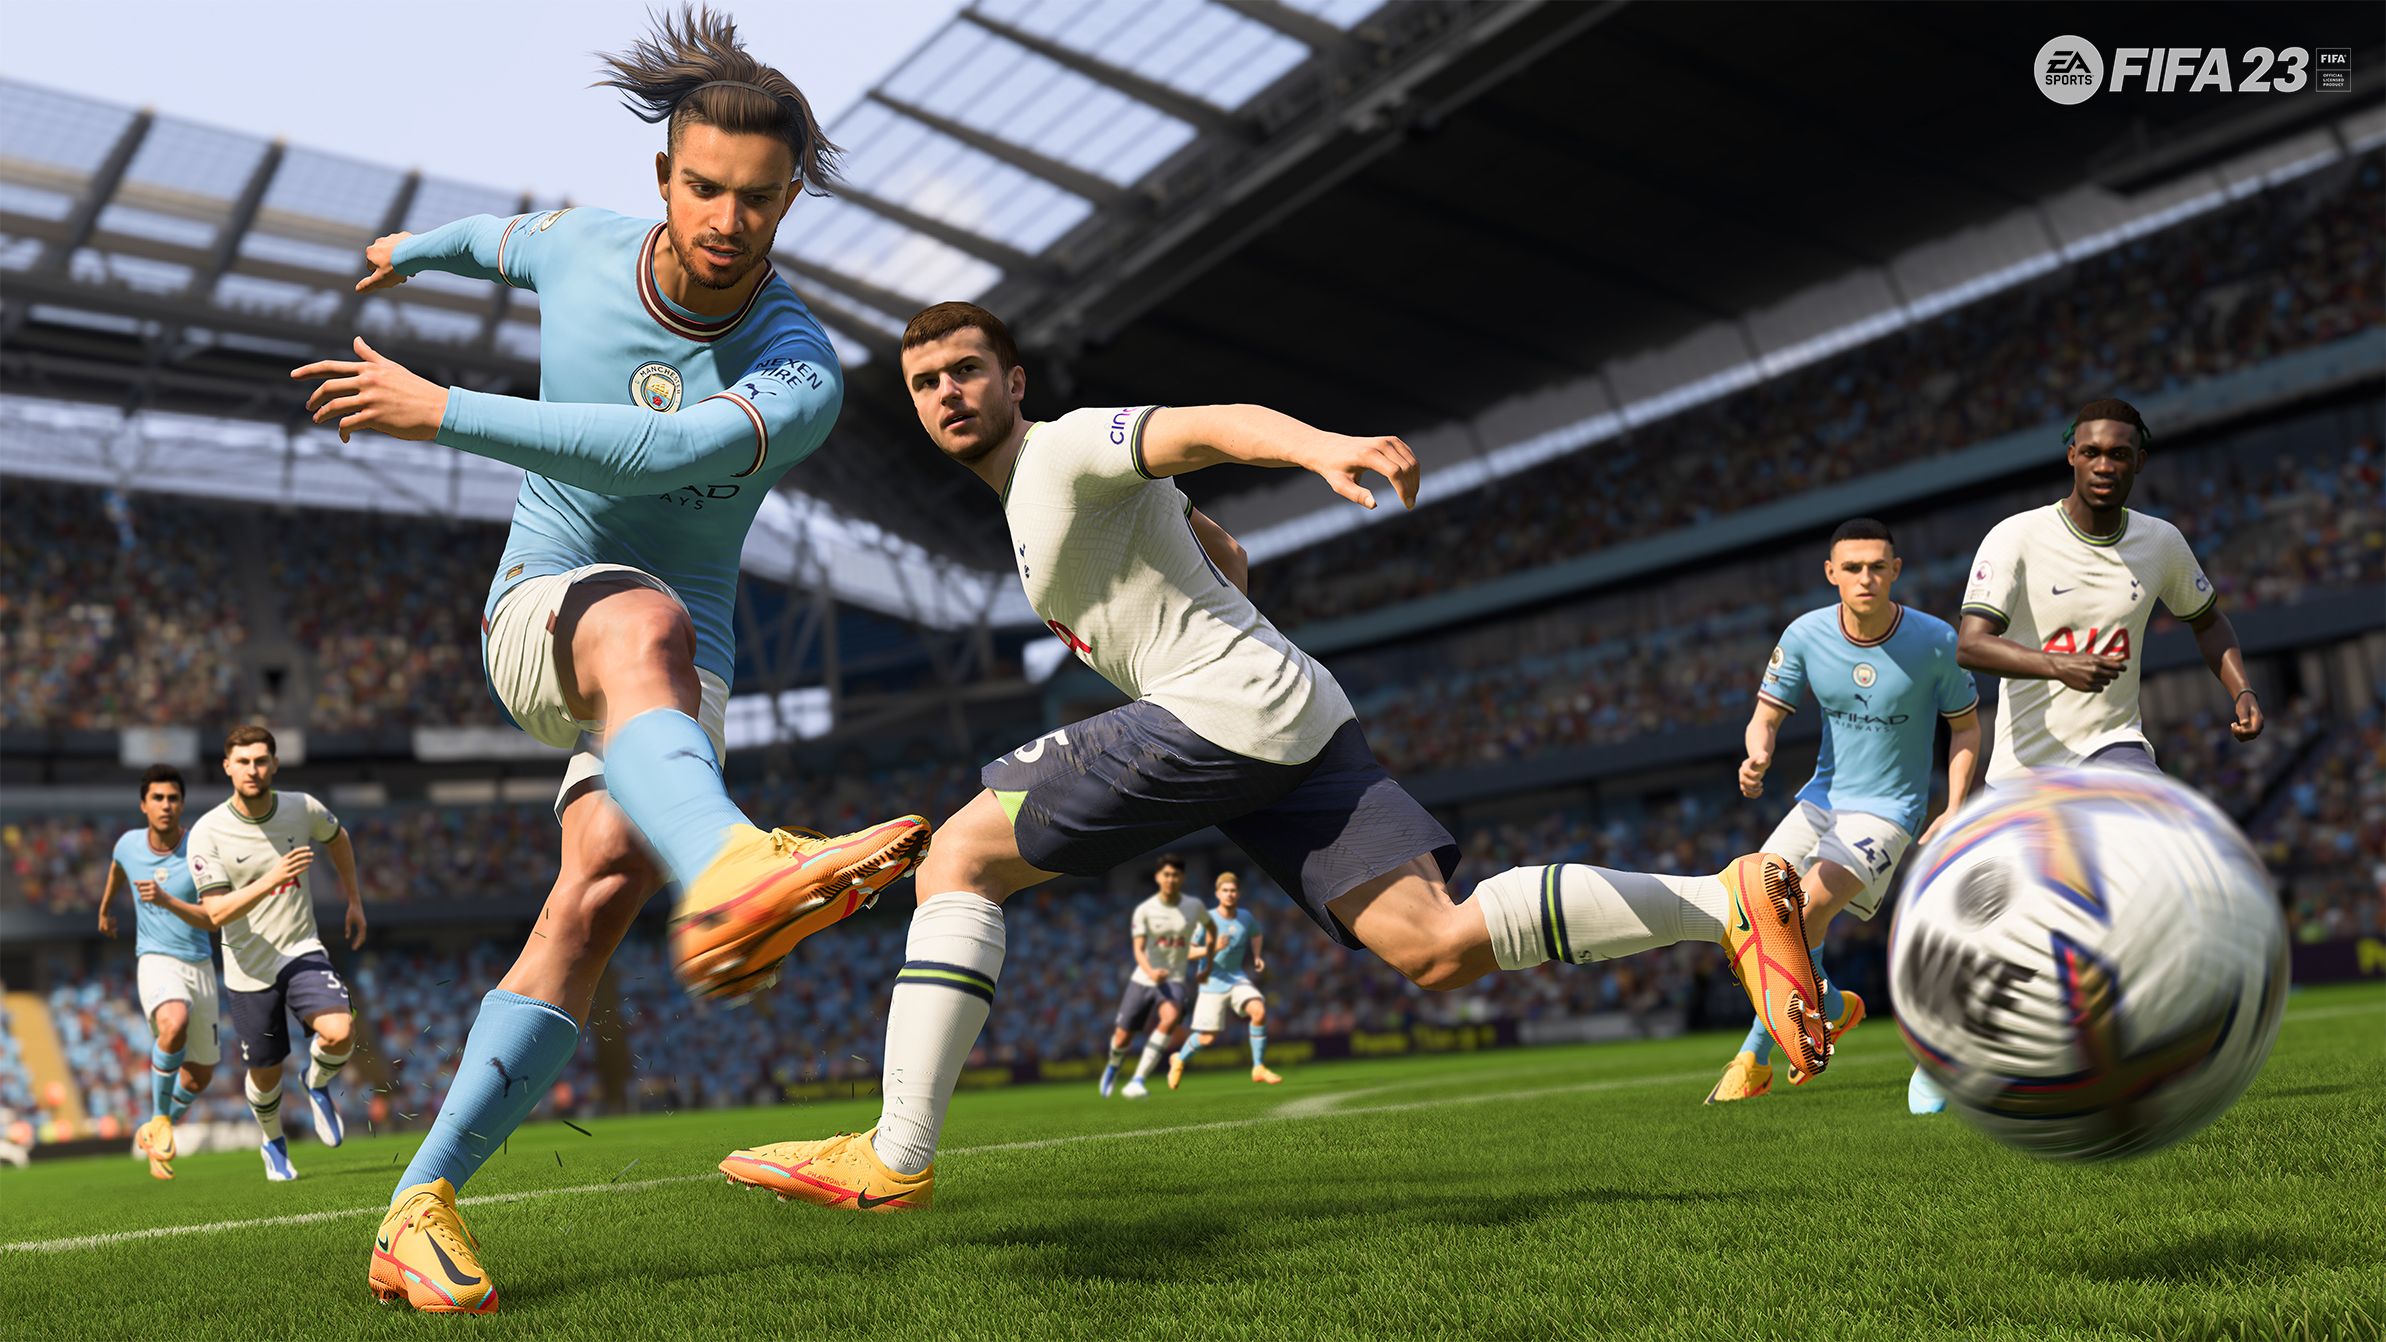 FIFA 23 TOURNAMENTS🏆⚽ - PS4, PS5, XBOX, PC